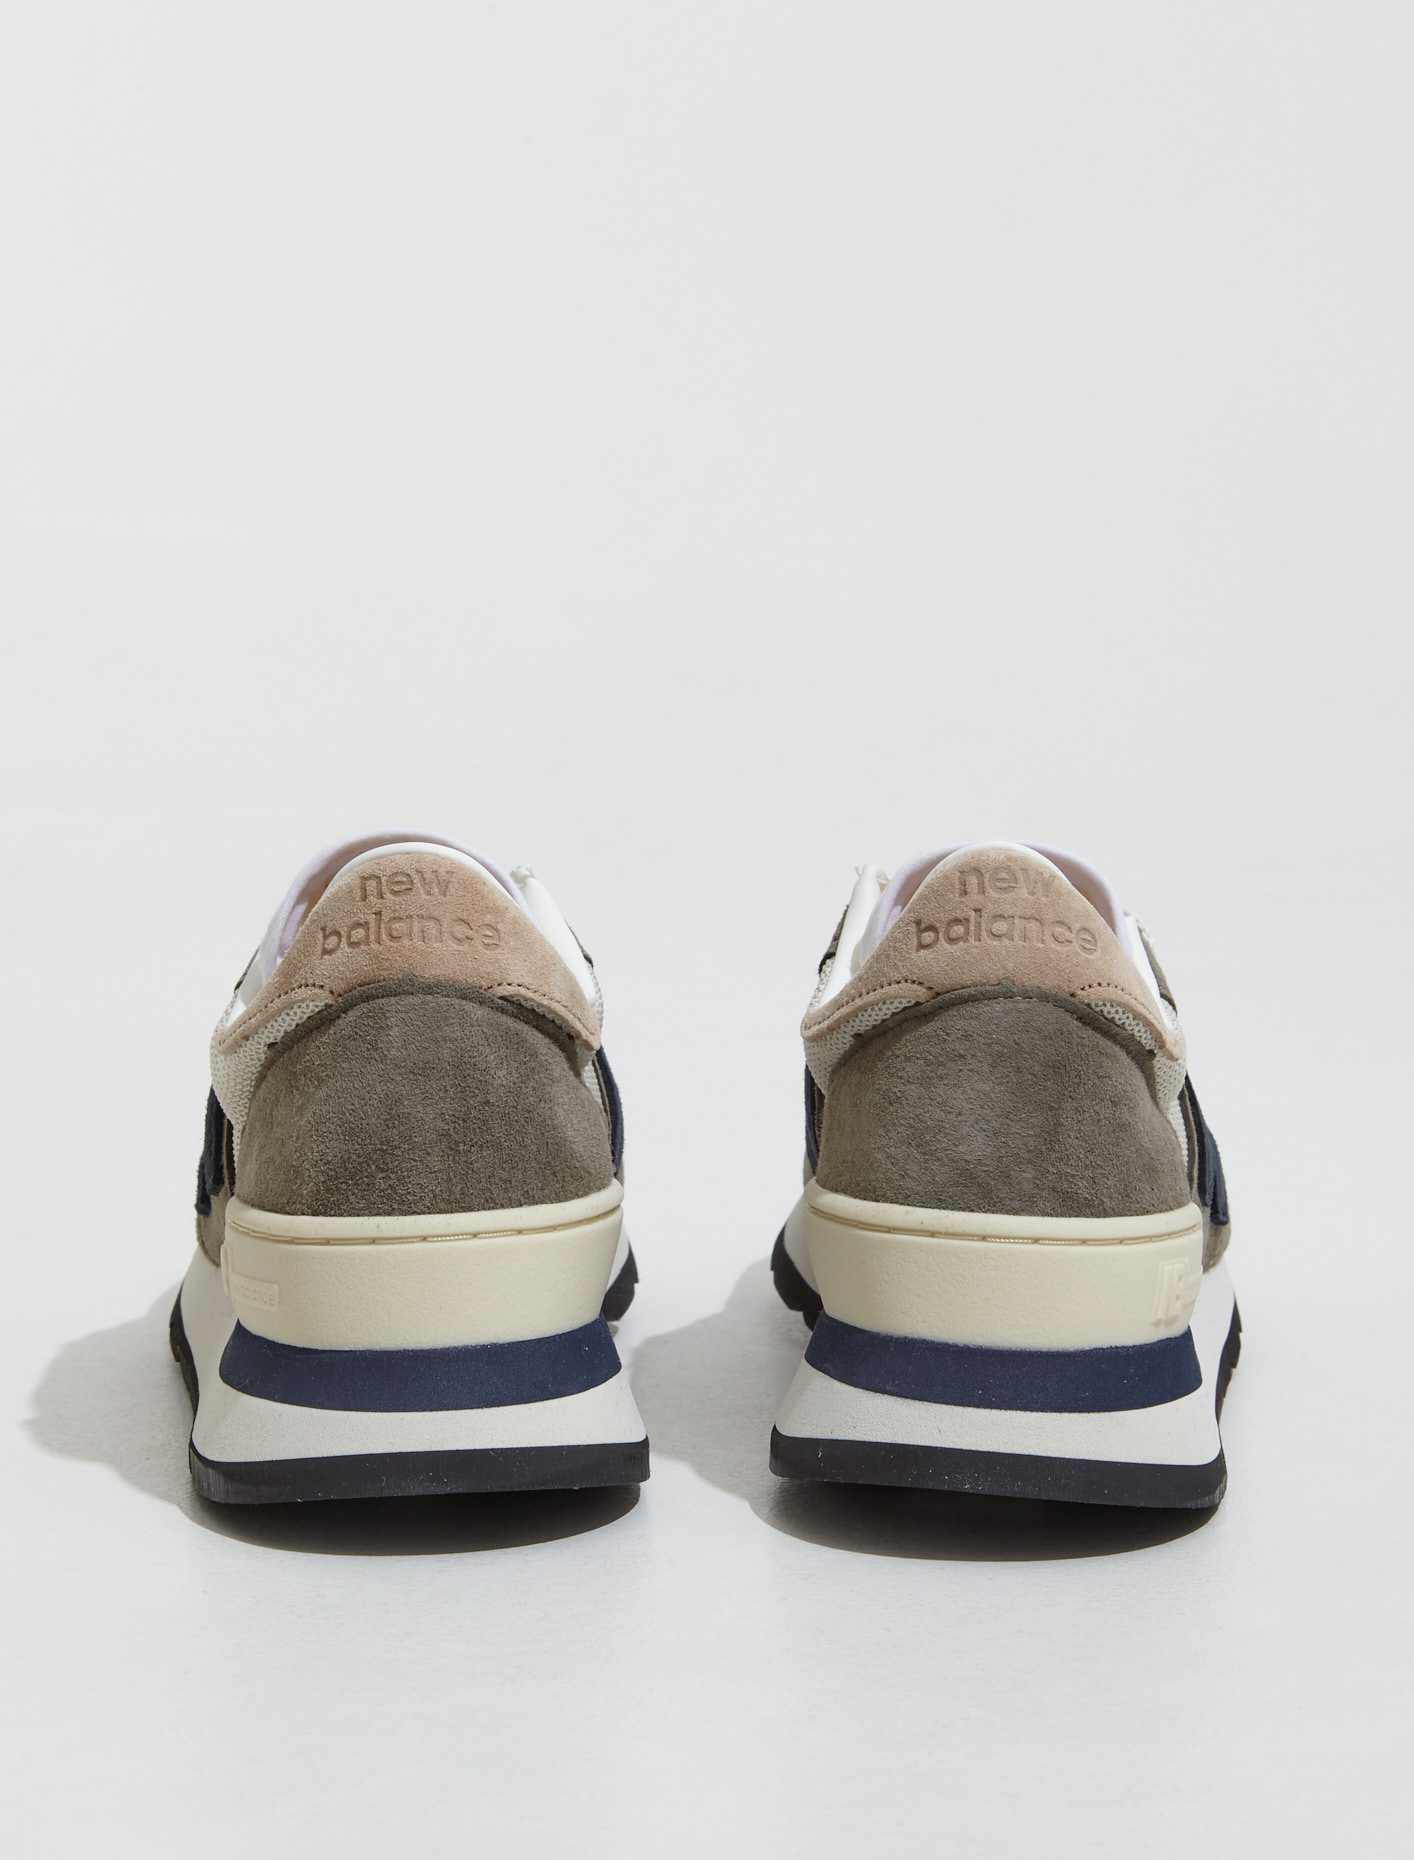 New Balance 990 v1 'MiUSA by Teddy Santis' Sneaker in Grey | Voo Store ...